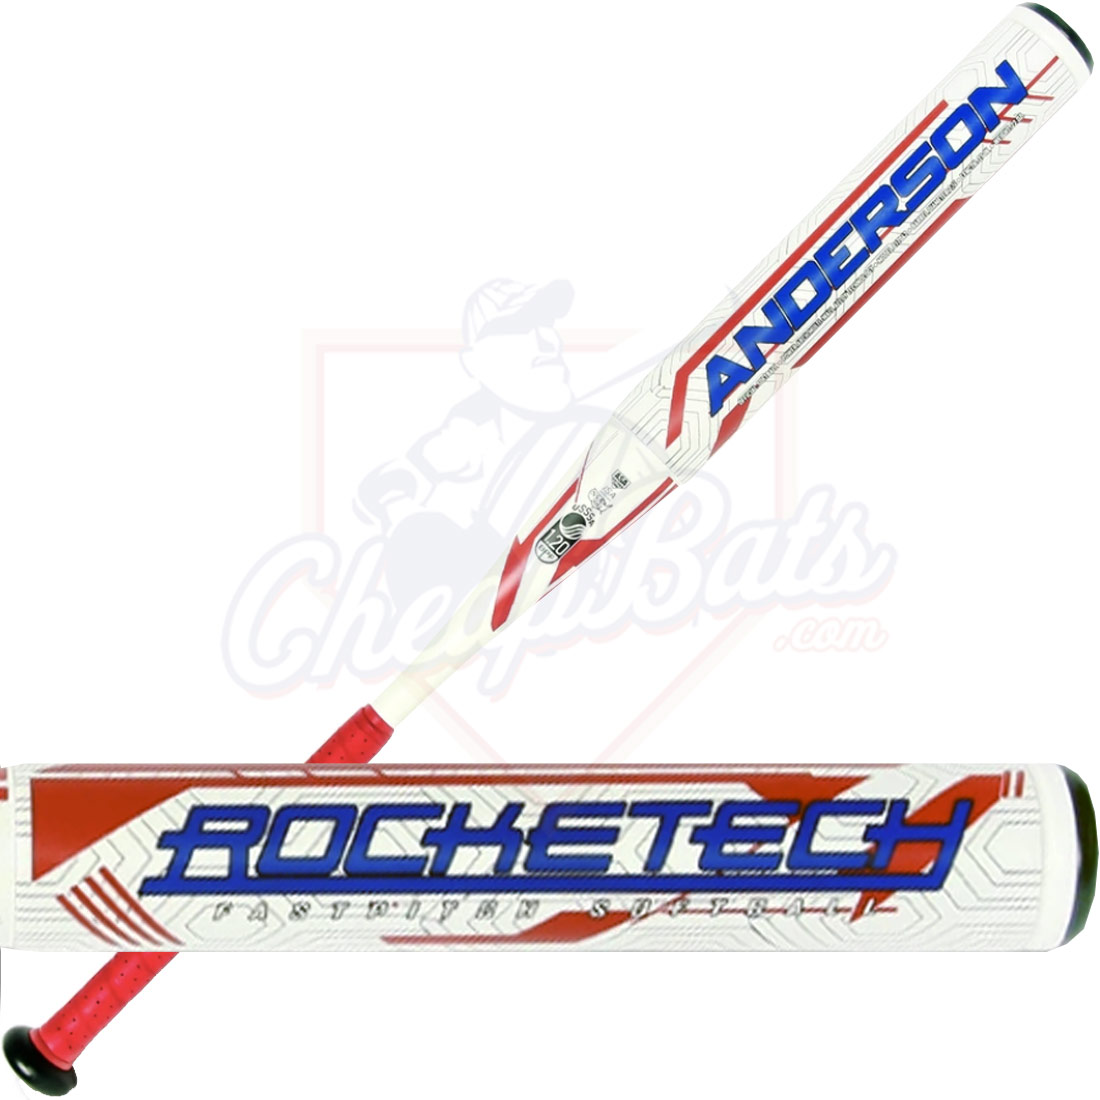 2020 Anderson RockeTech Fastpitch Softball Bat -9oz 017042